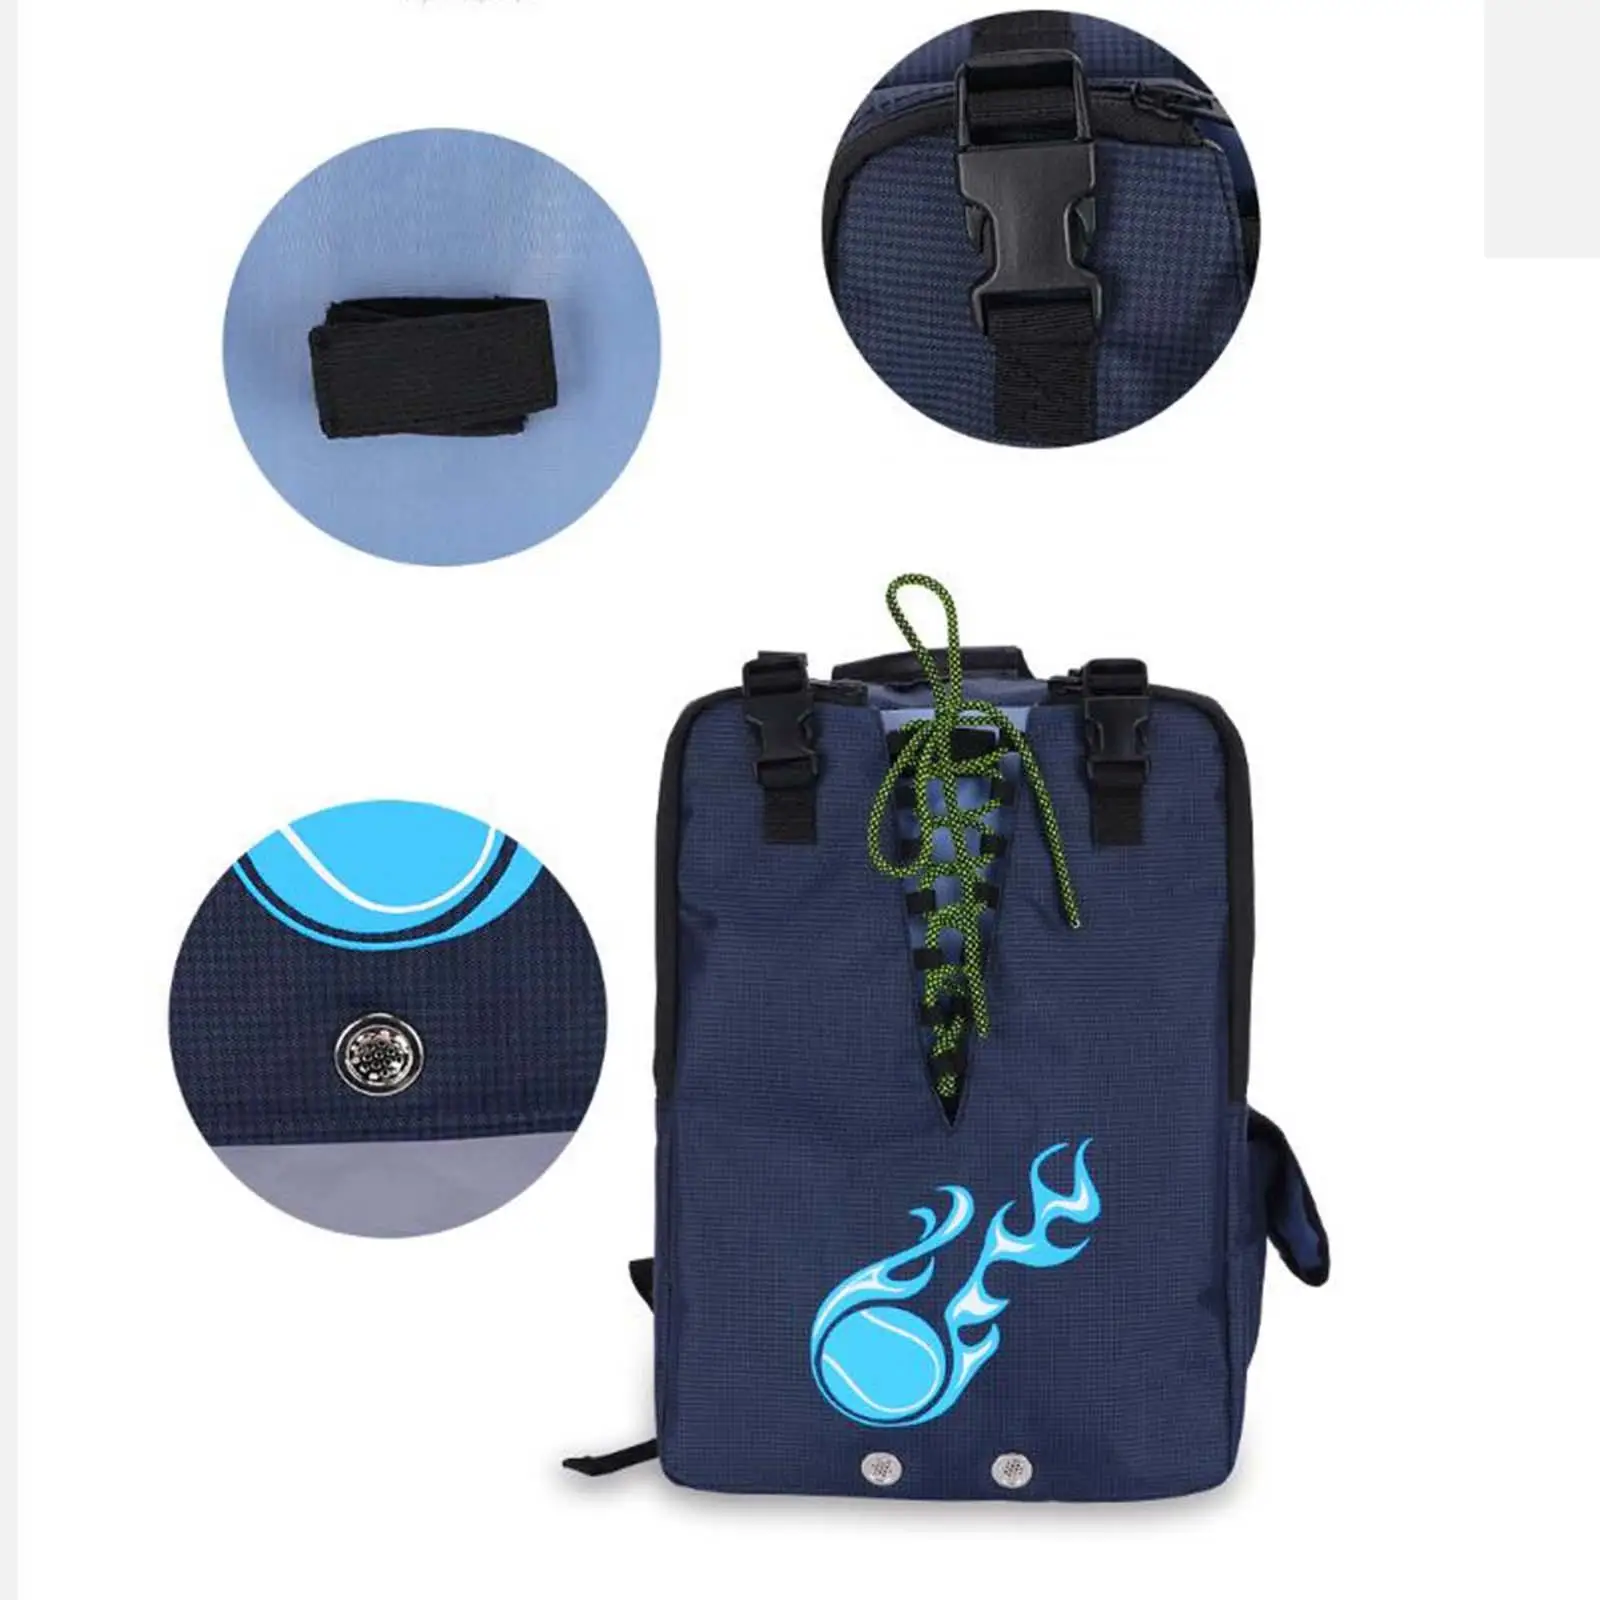 Tennis Bag Breathable Large Sports Backpack for Squash Pickleball Badminton